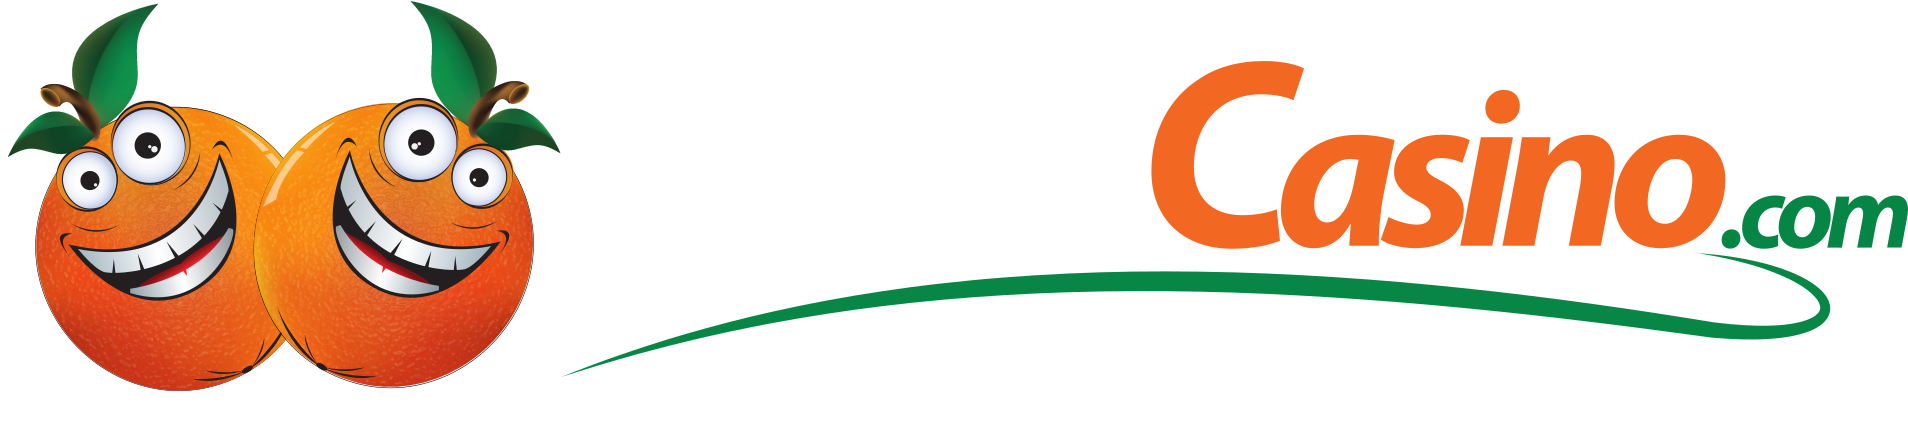 Casino as One of the Top 5 Internet Casinos with no deposit bonus codes